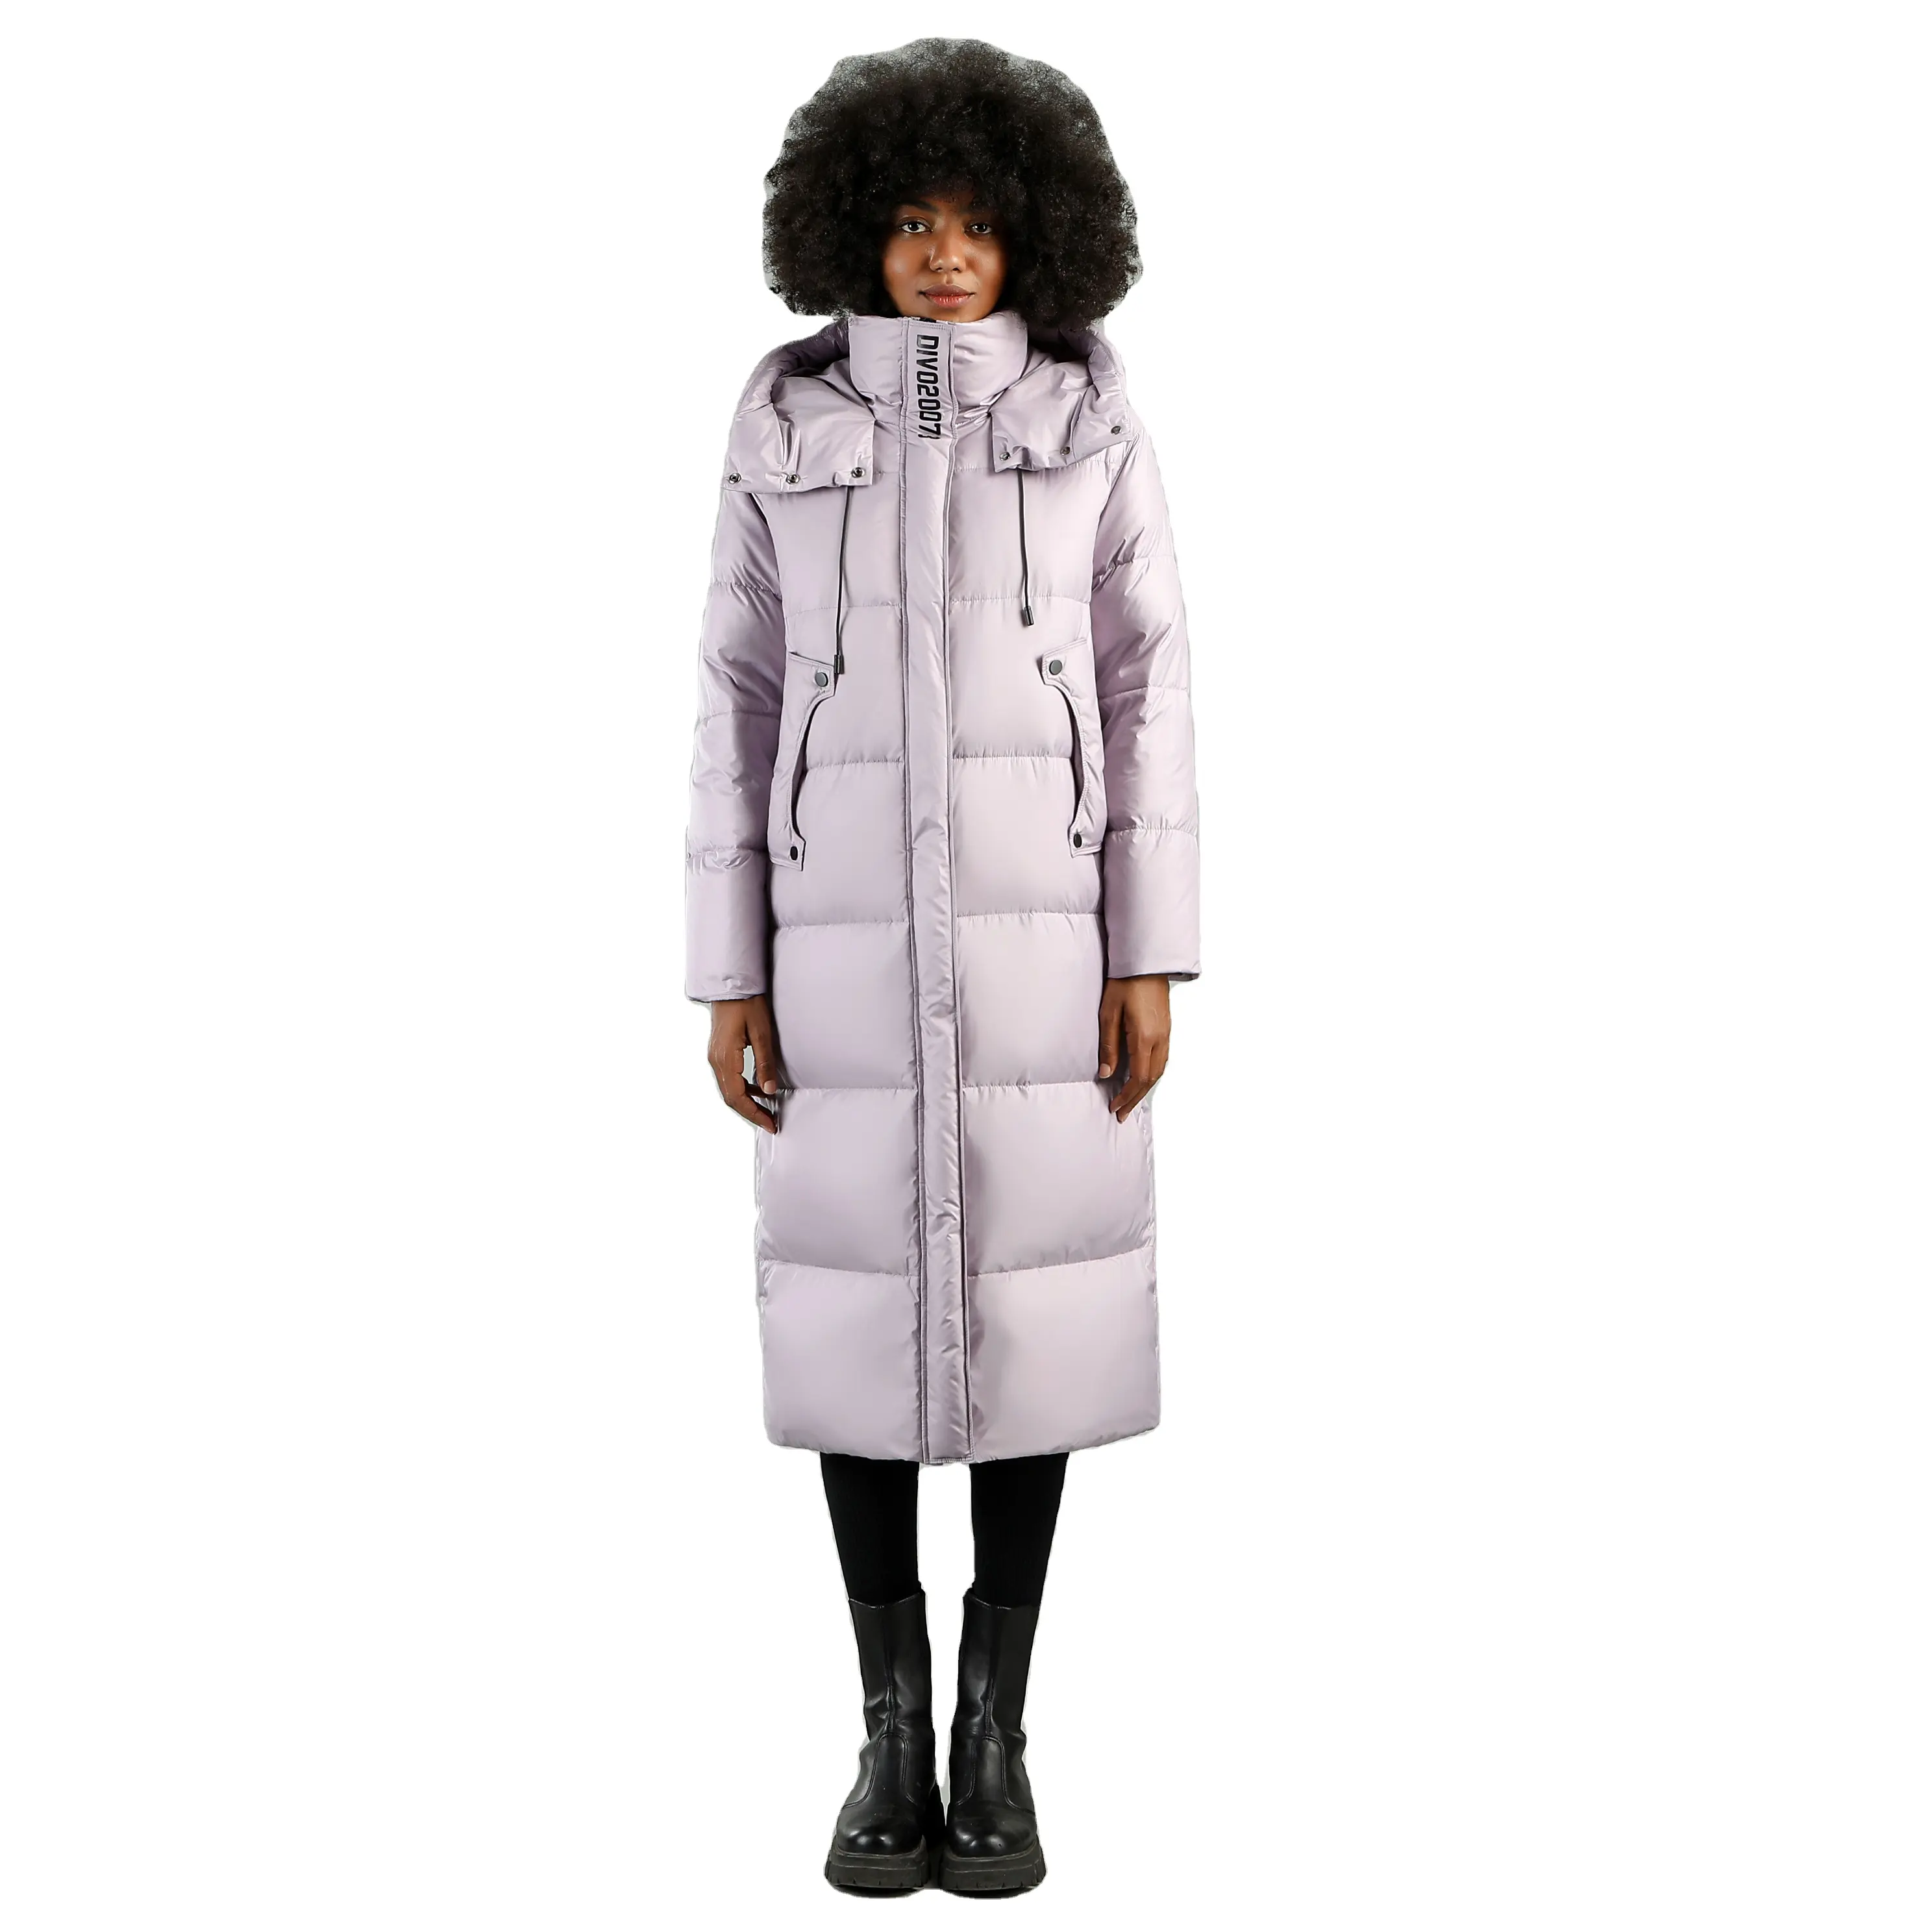 ONG style-chaqueta grande a prueba de viento para mujer, abrigos ajustados a prueba de agua, elegante